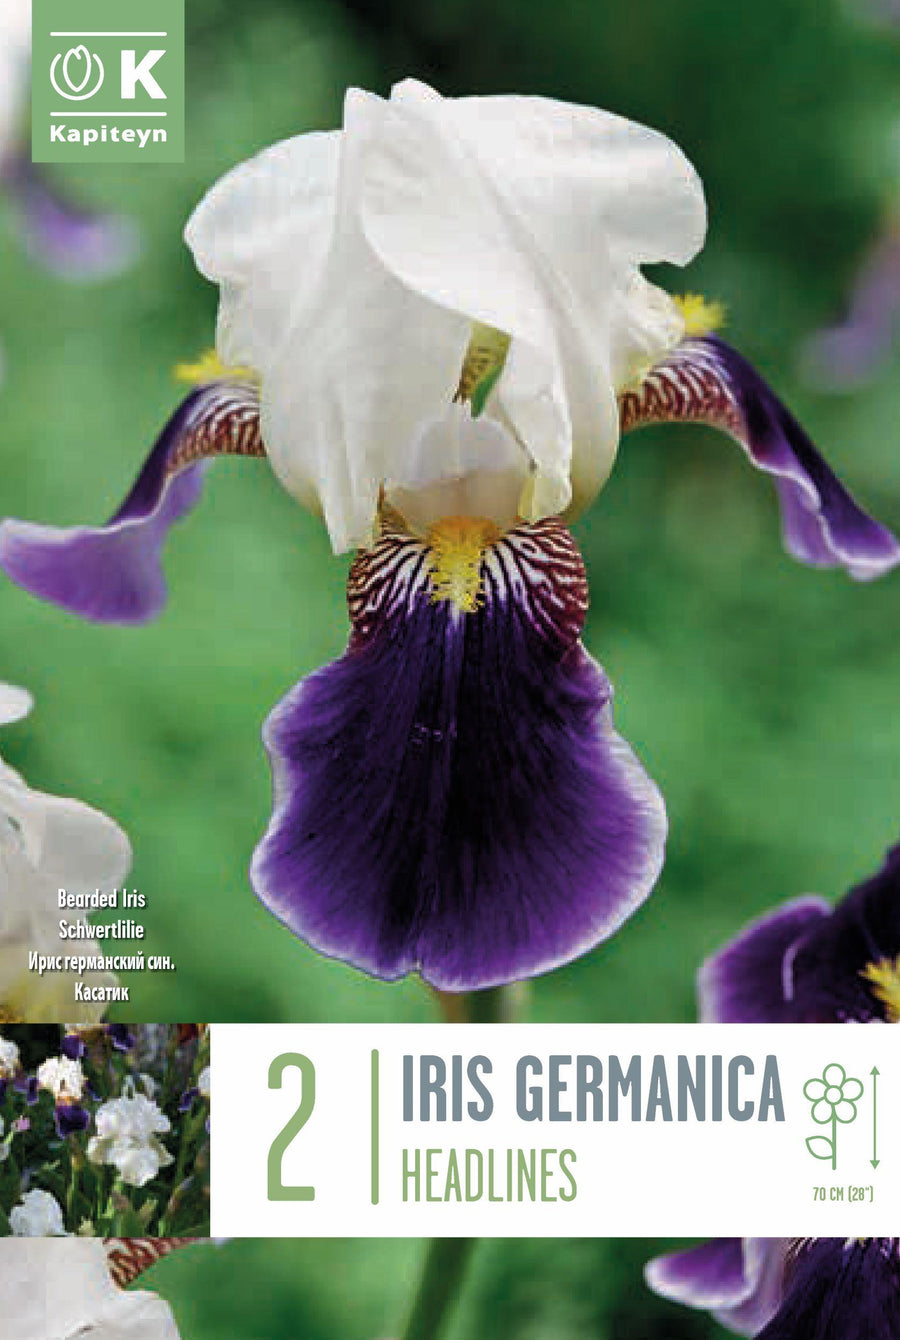 Iris reticulata 'Frozen Planet